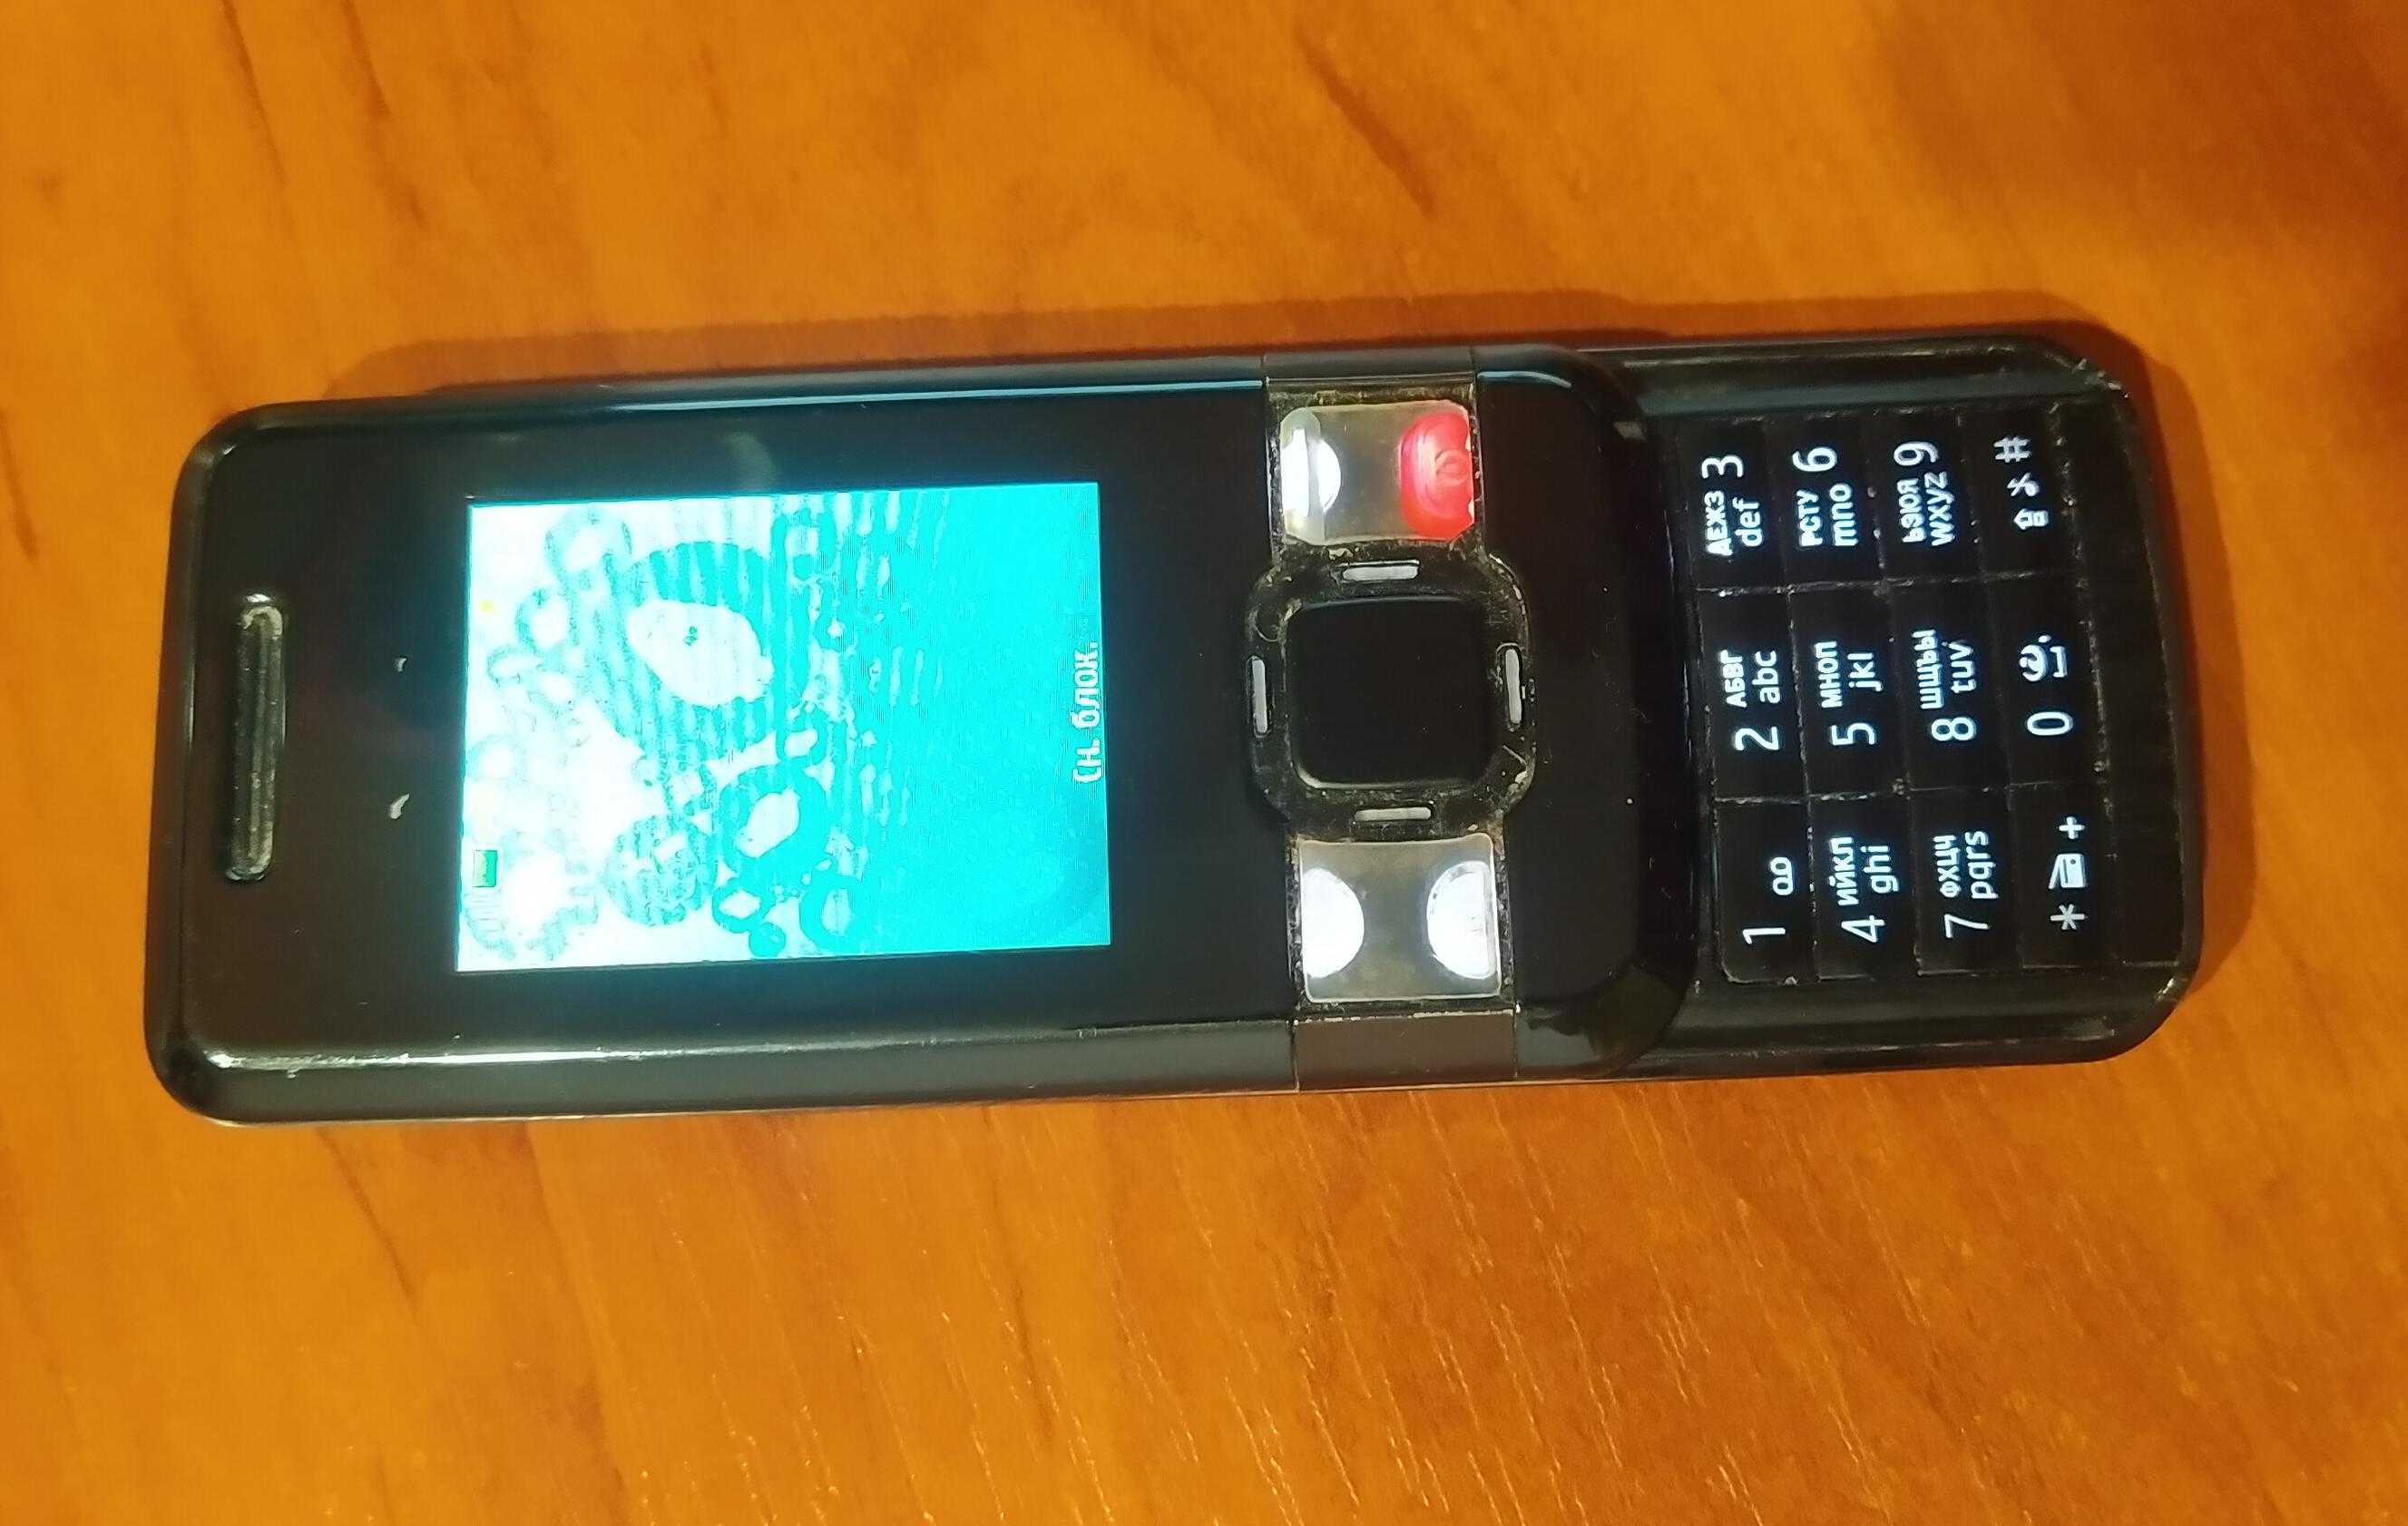 Телефон Nokia 7100 Supernova